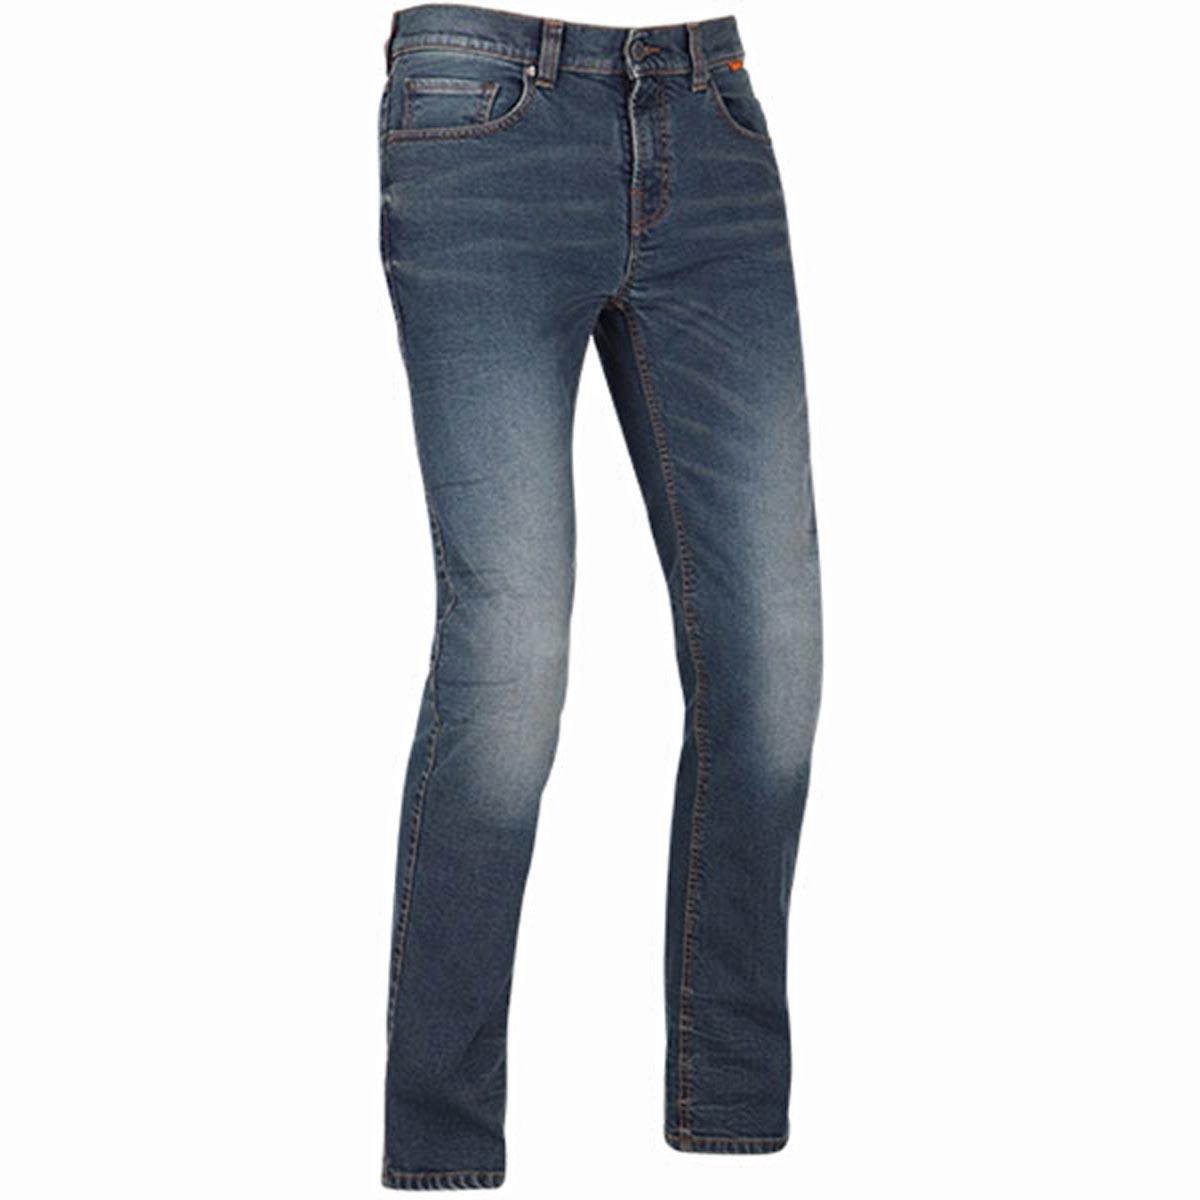 Richa Original 2 Slim Cut Jeans Washed Blue 30in Leg 44in Waist